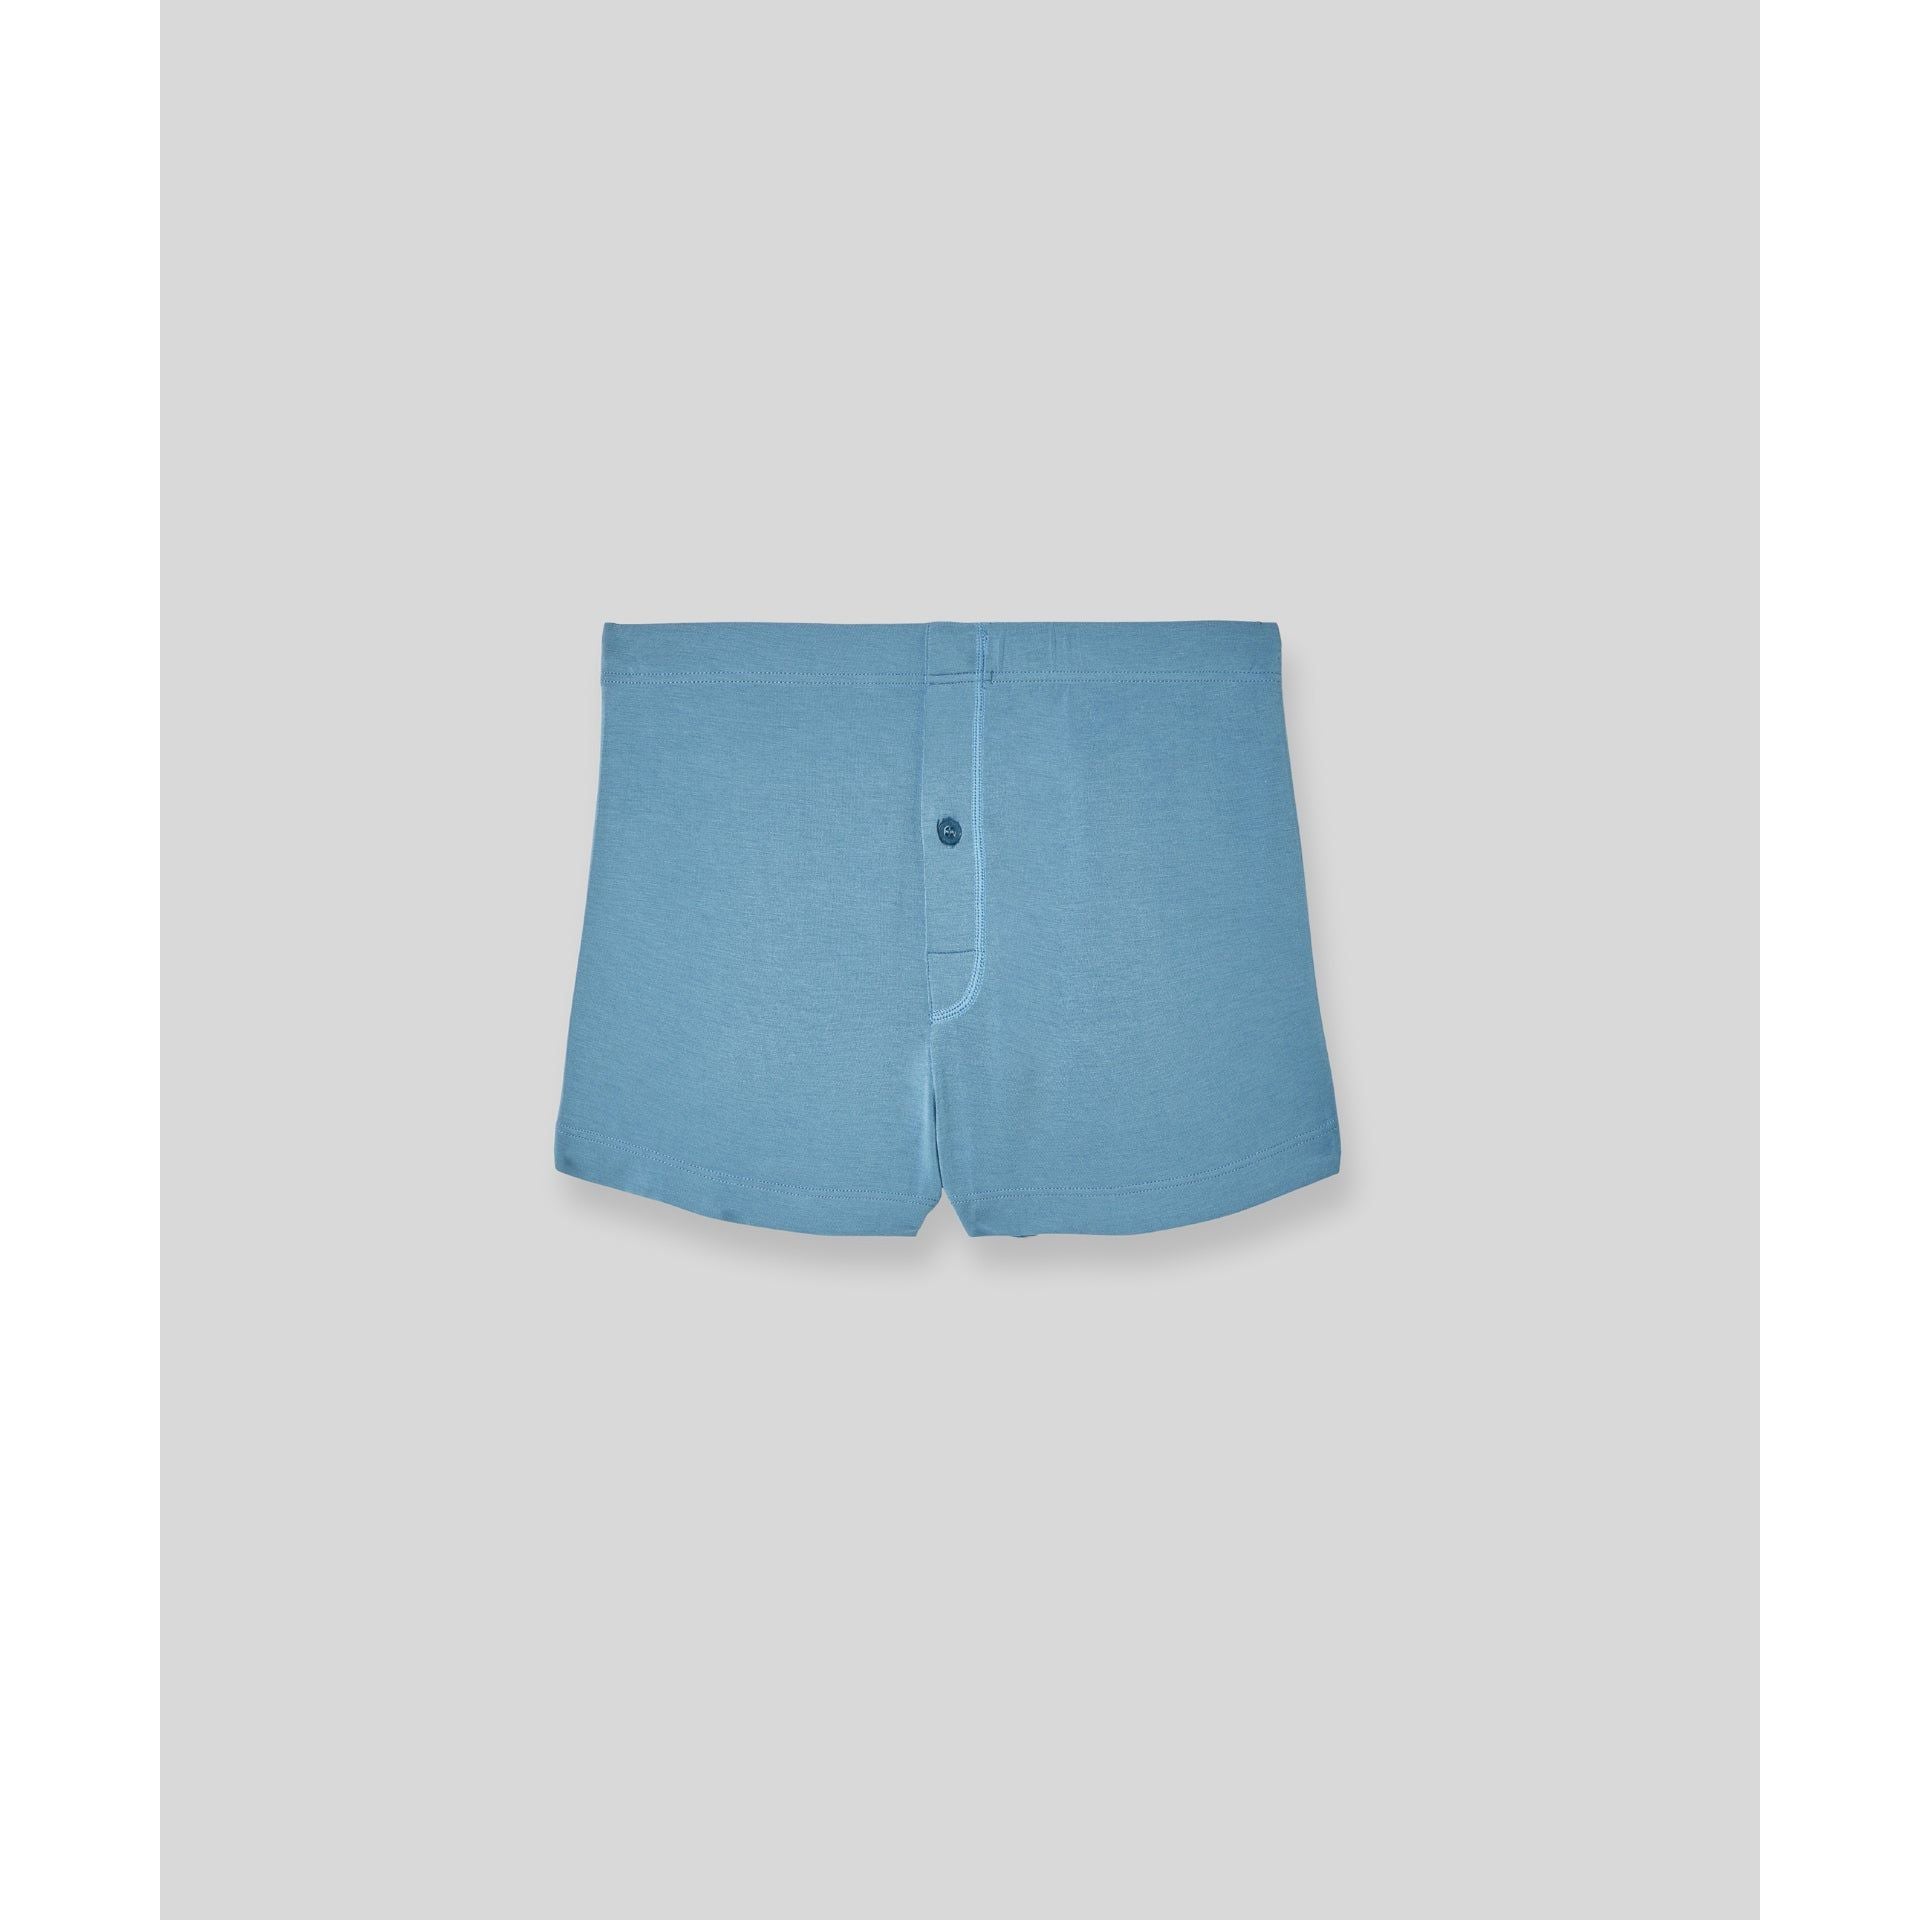 SilkCut Slim Modal-Boxers for Men in Blue Color